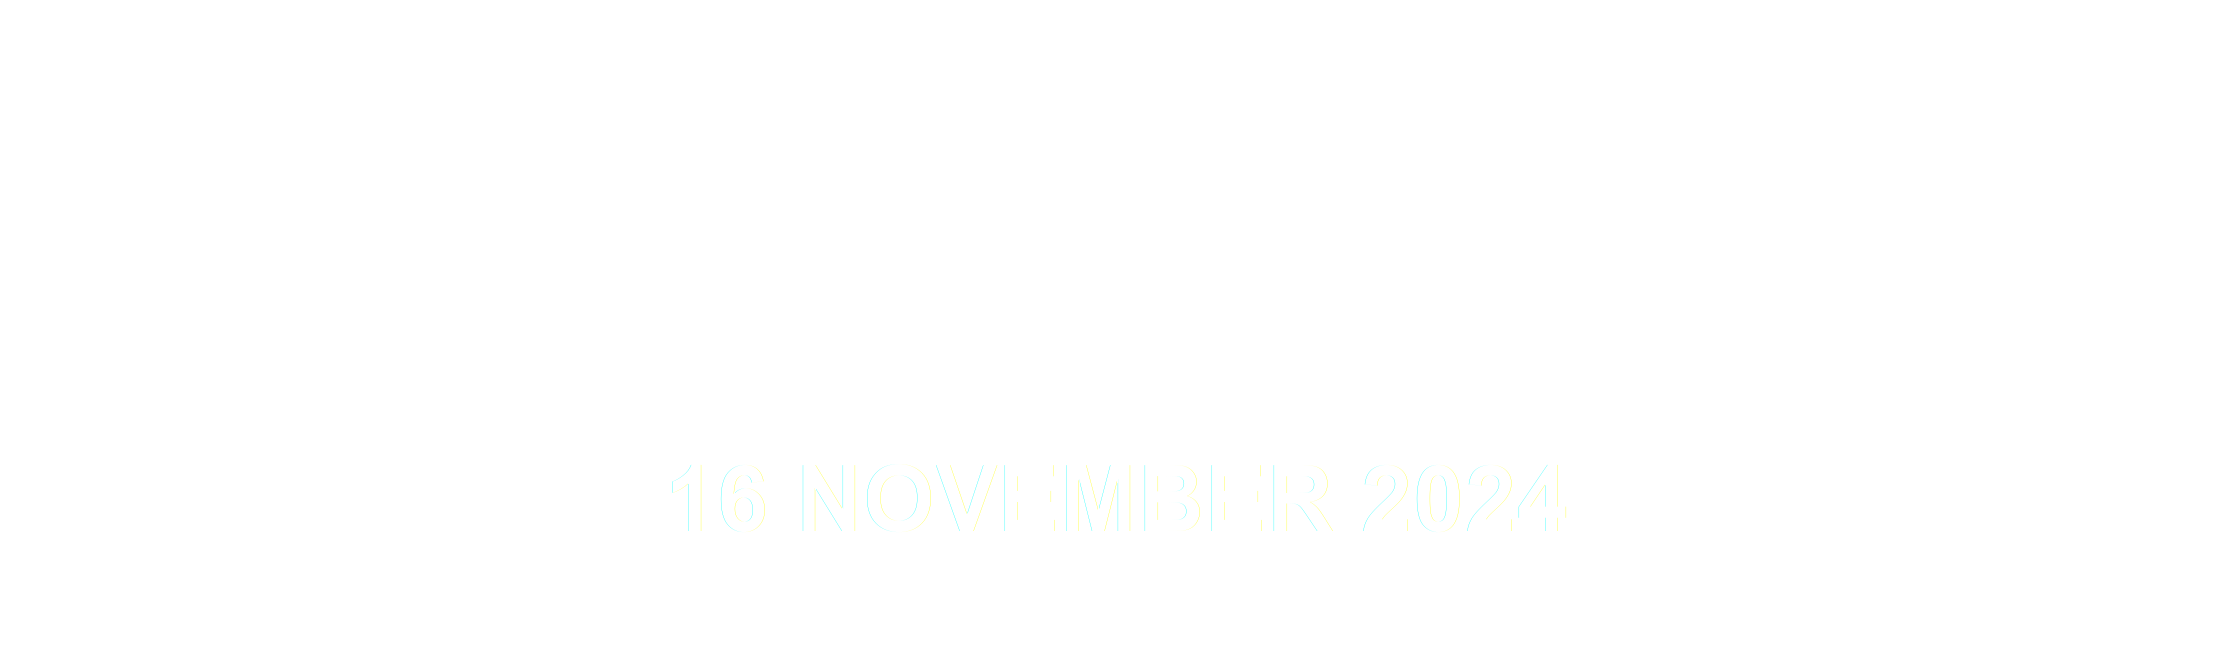 Stanmore Music Festival 2024